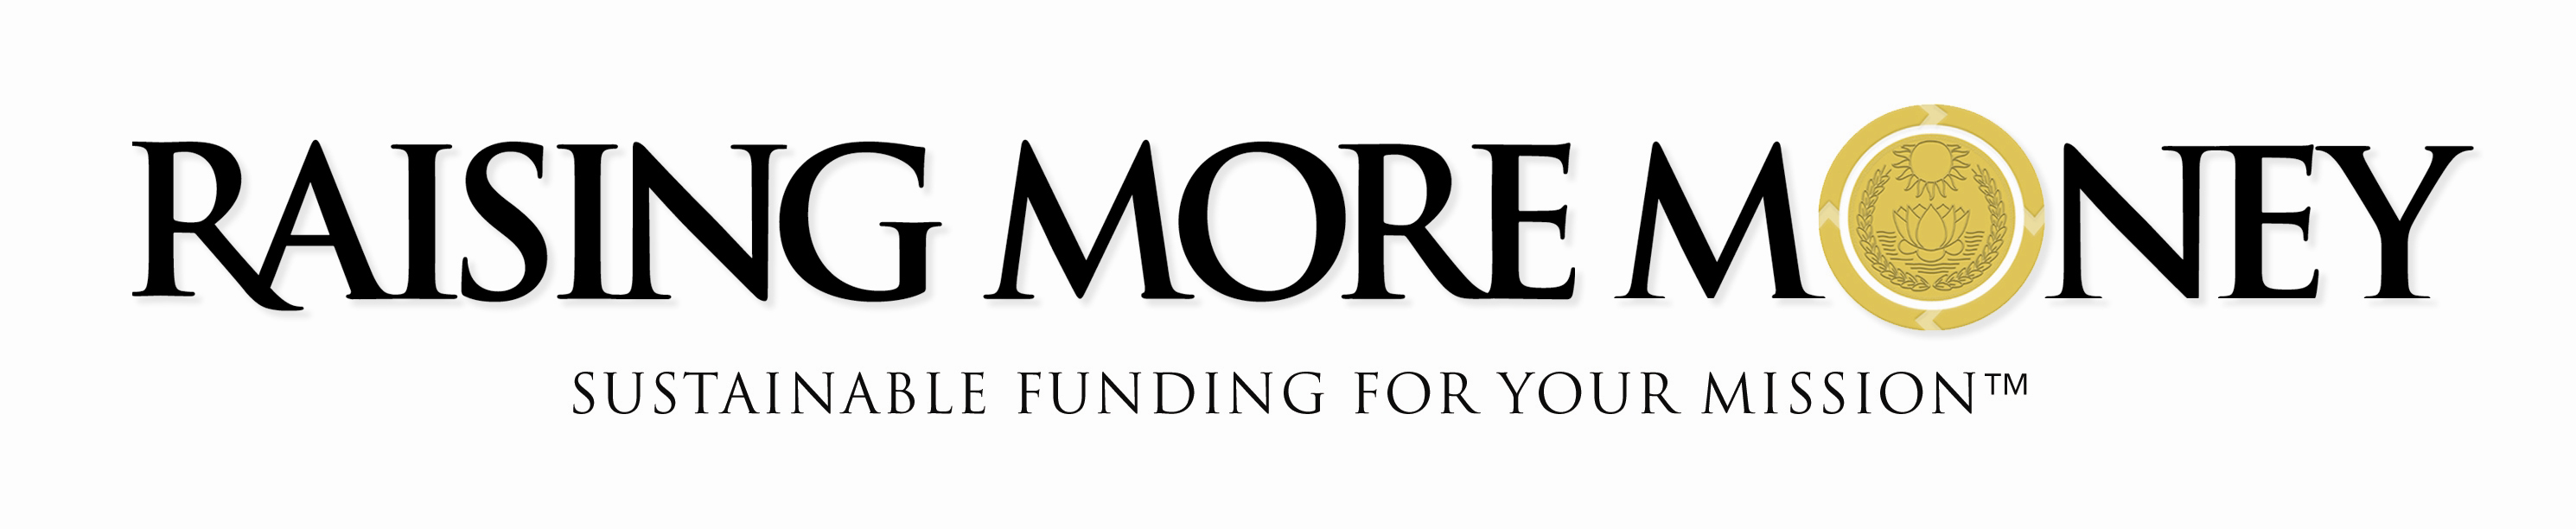 Raising More Money Logo